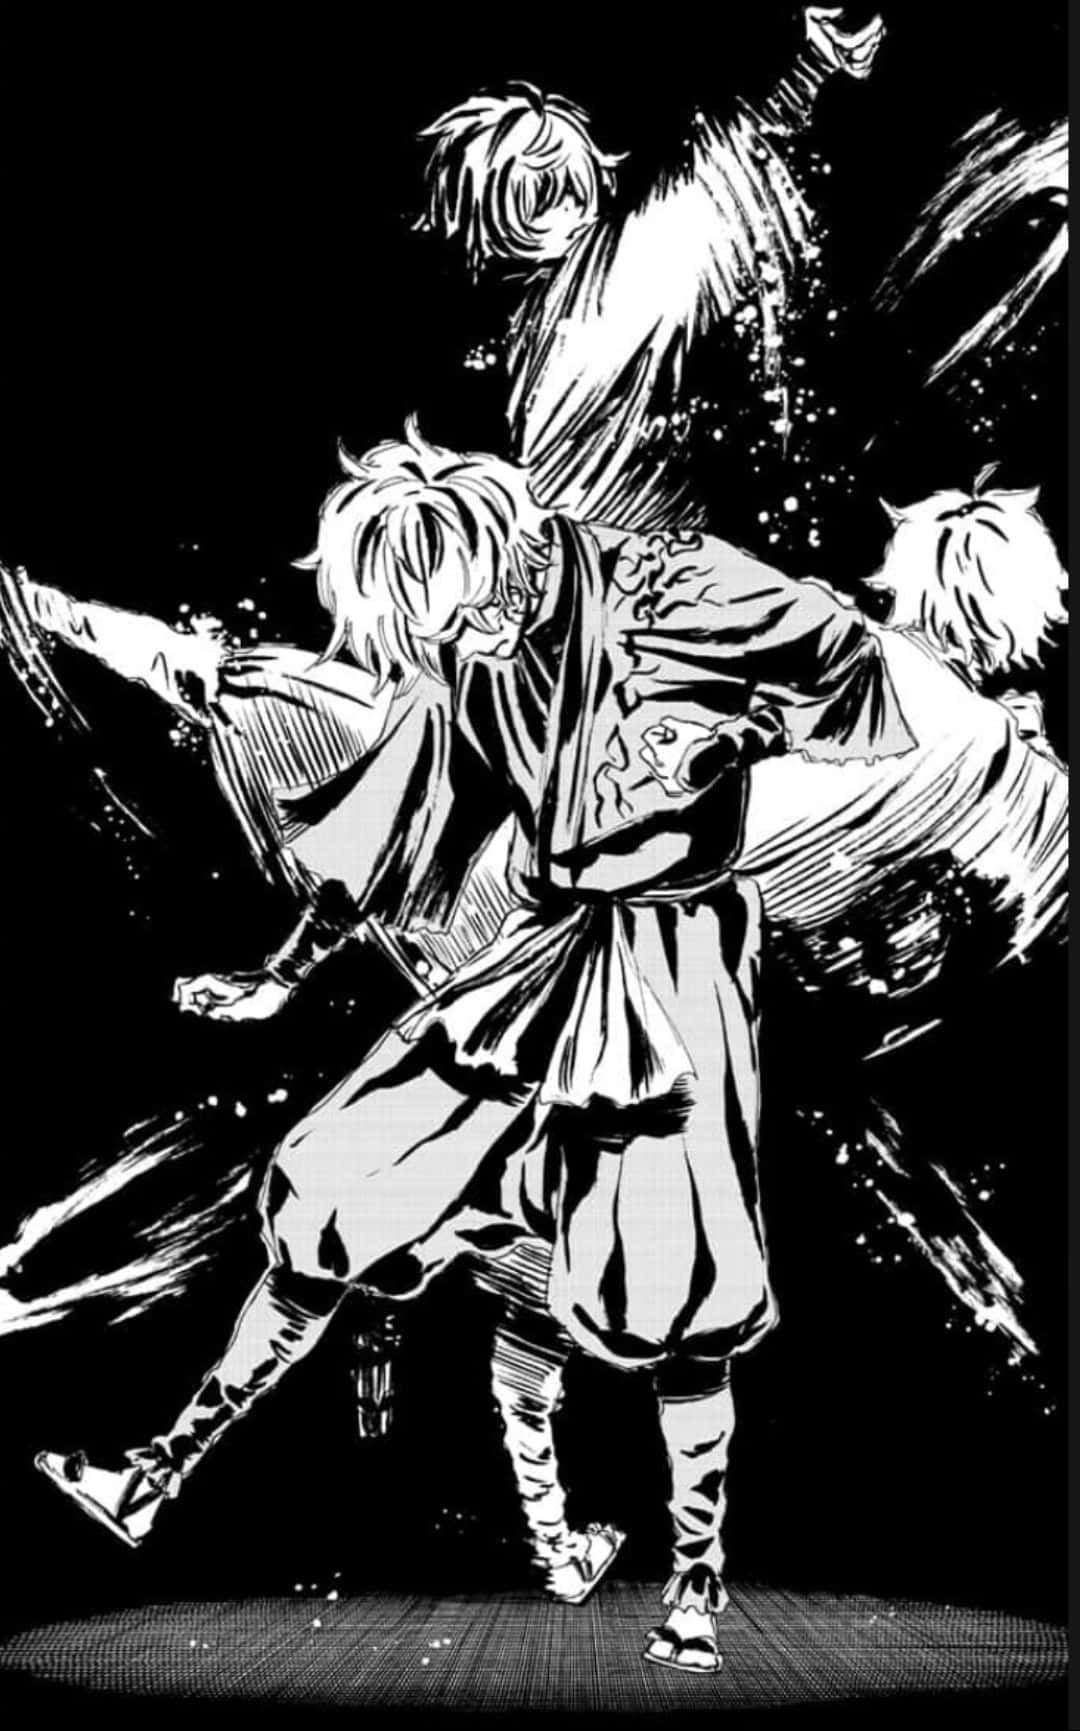 Dynamic Samurai Duel Manga Art Wallpaper